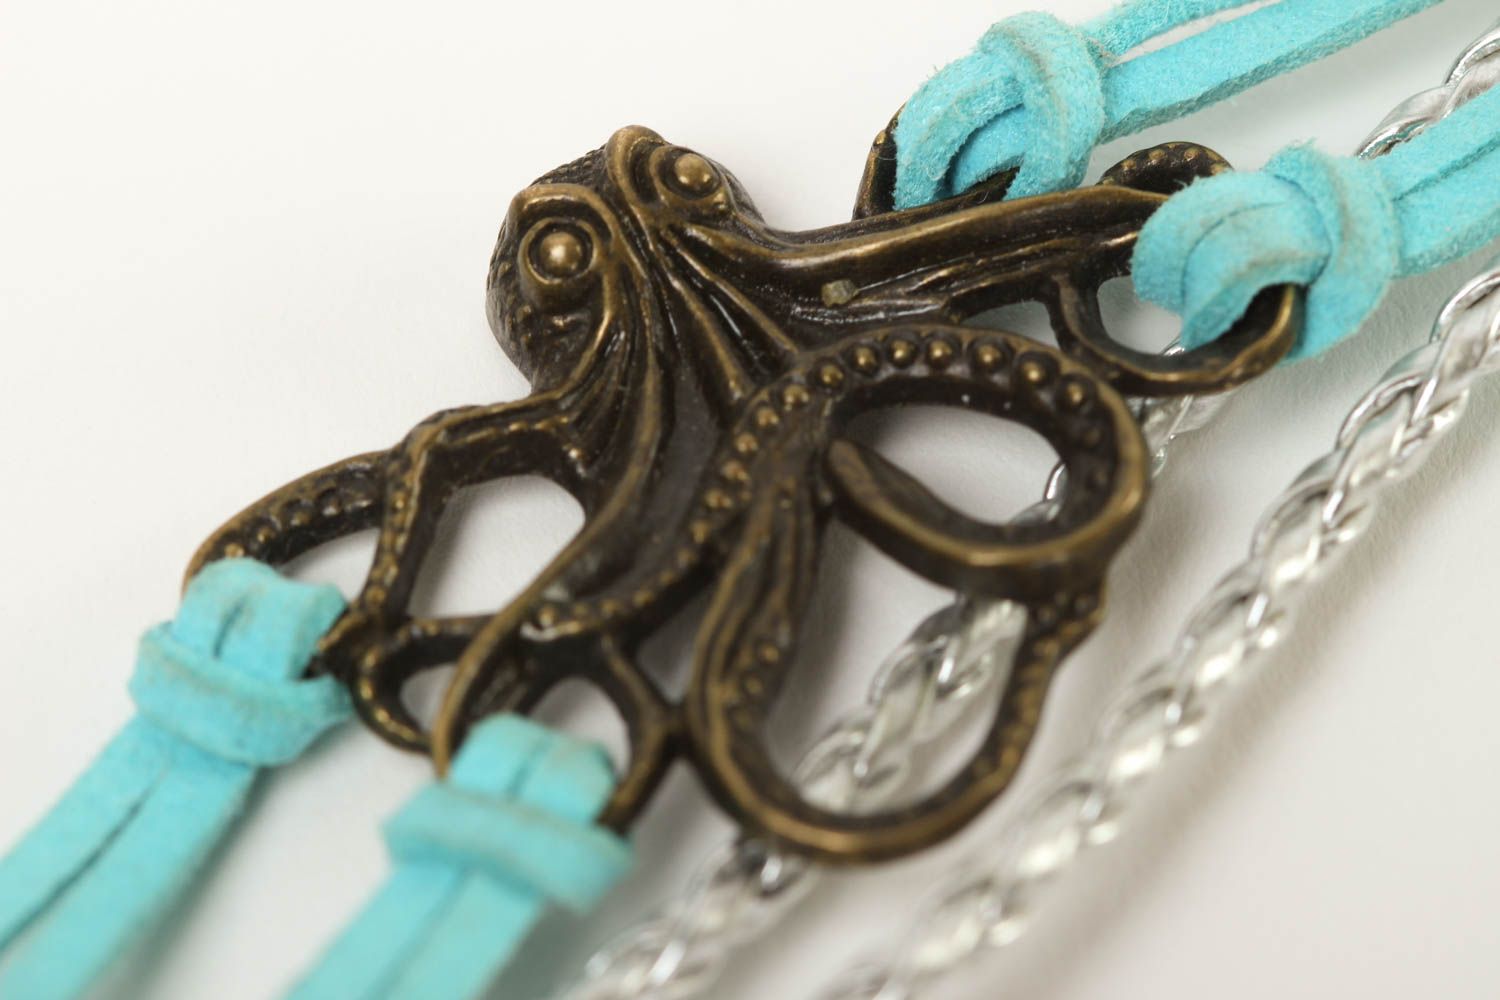 Unusual handmade leather bracelet designs suede wrist bracelet gifts for her photo 2